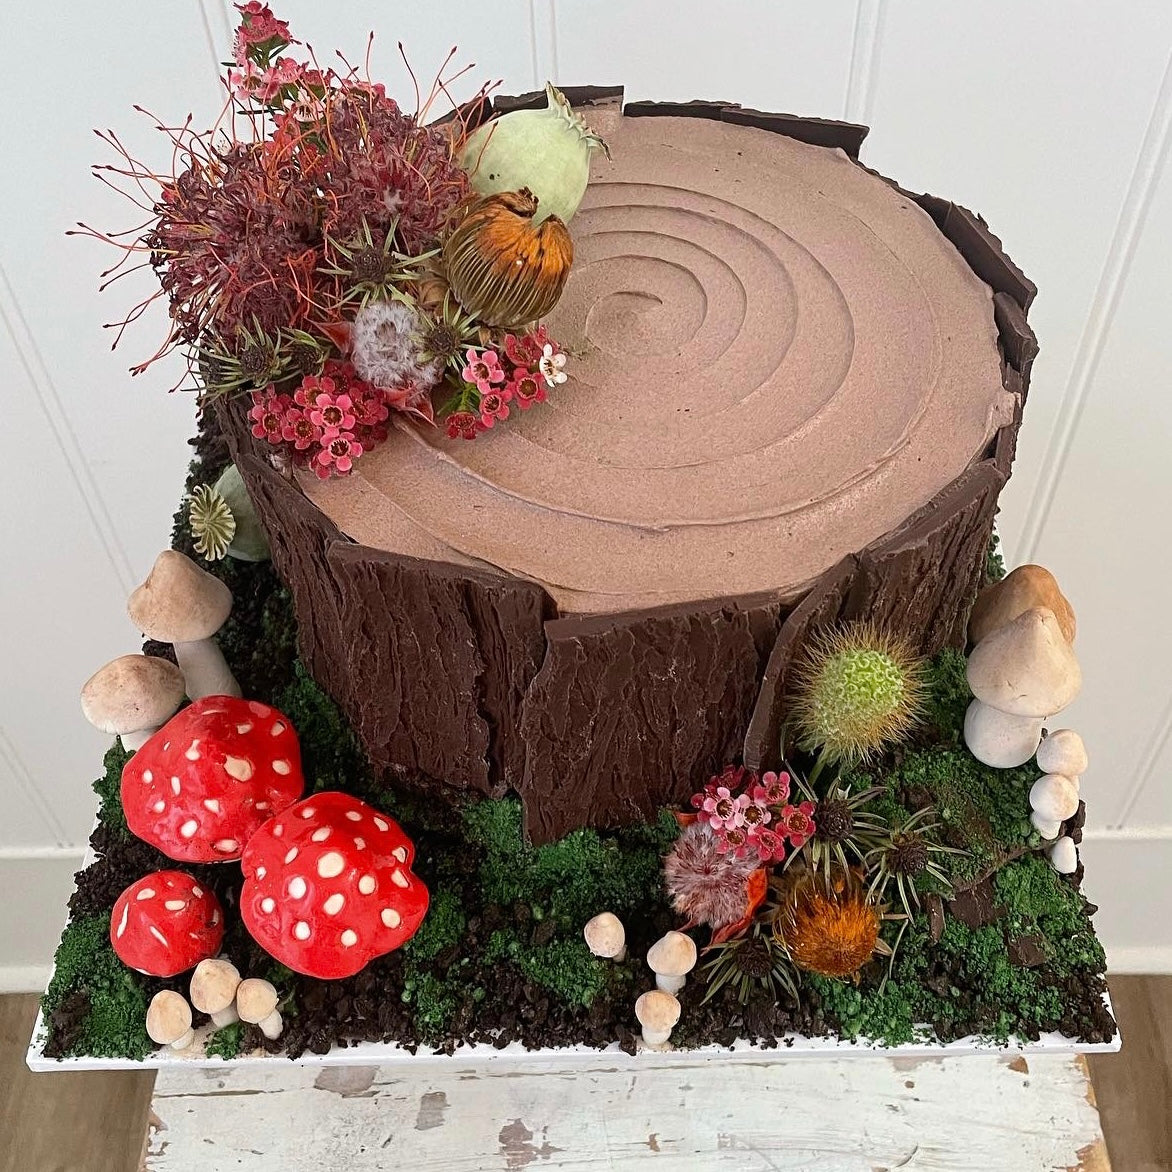 Tree stump cake I made for my grandpa's birthday, raspberry chocolate, he  loved it! : r/Baking